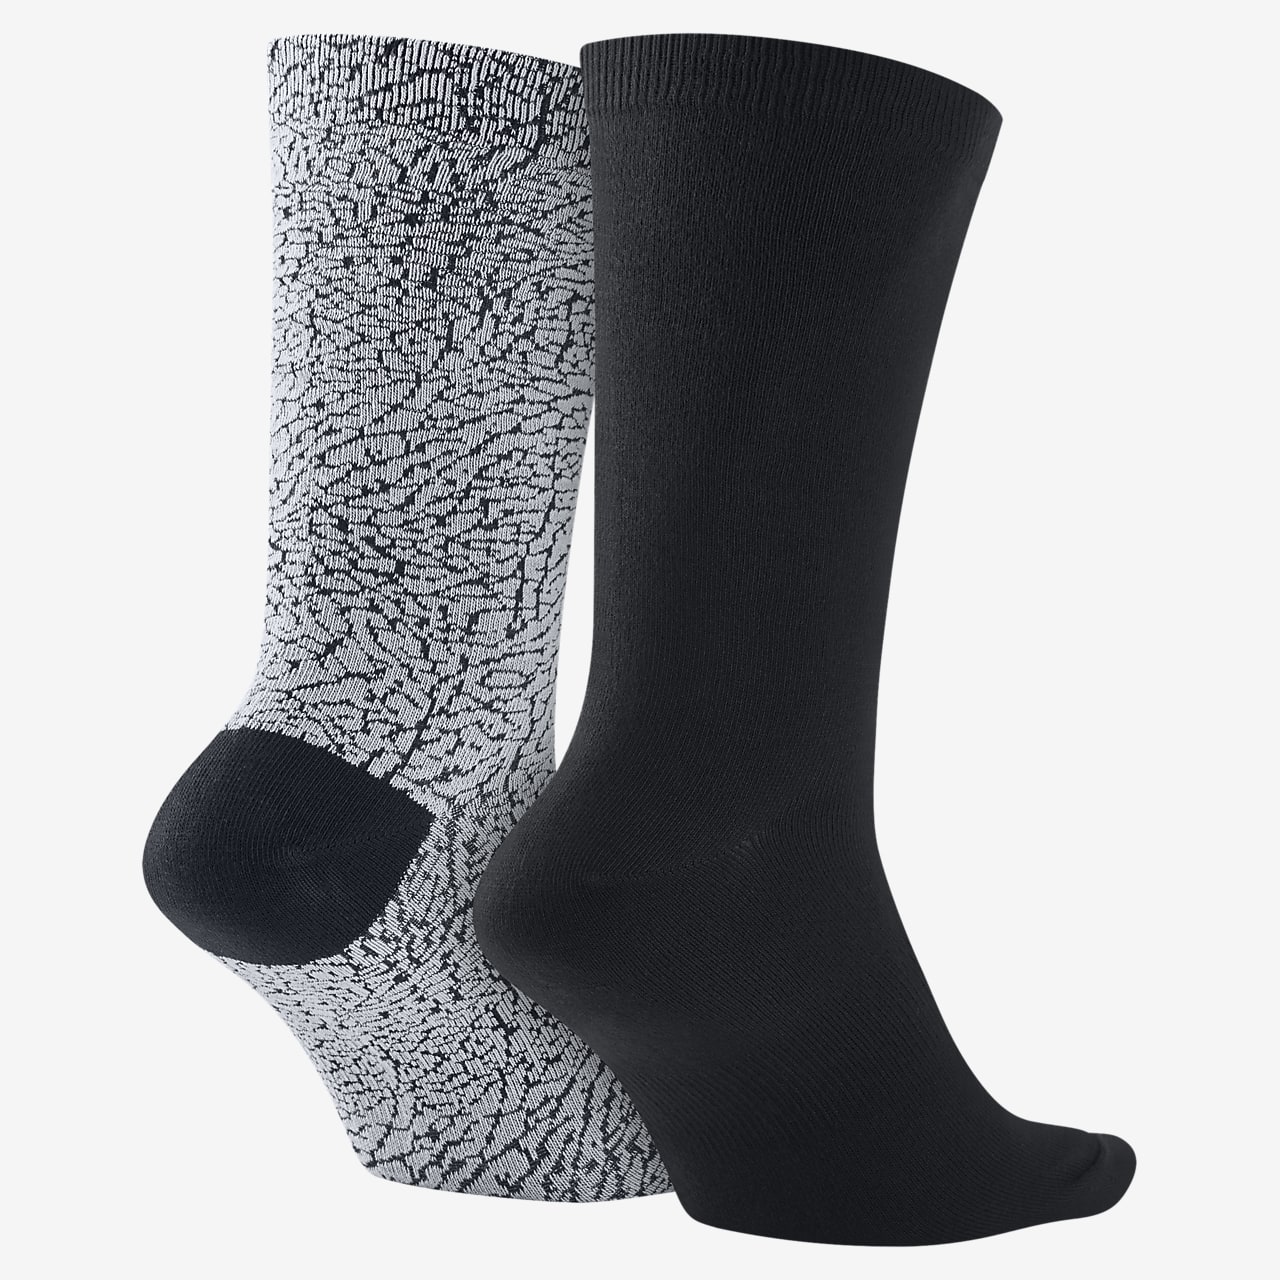 jordan elephant print socks